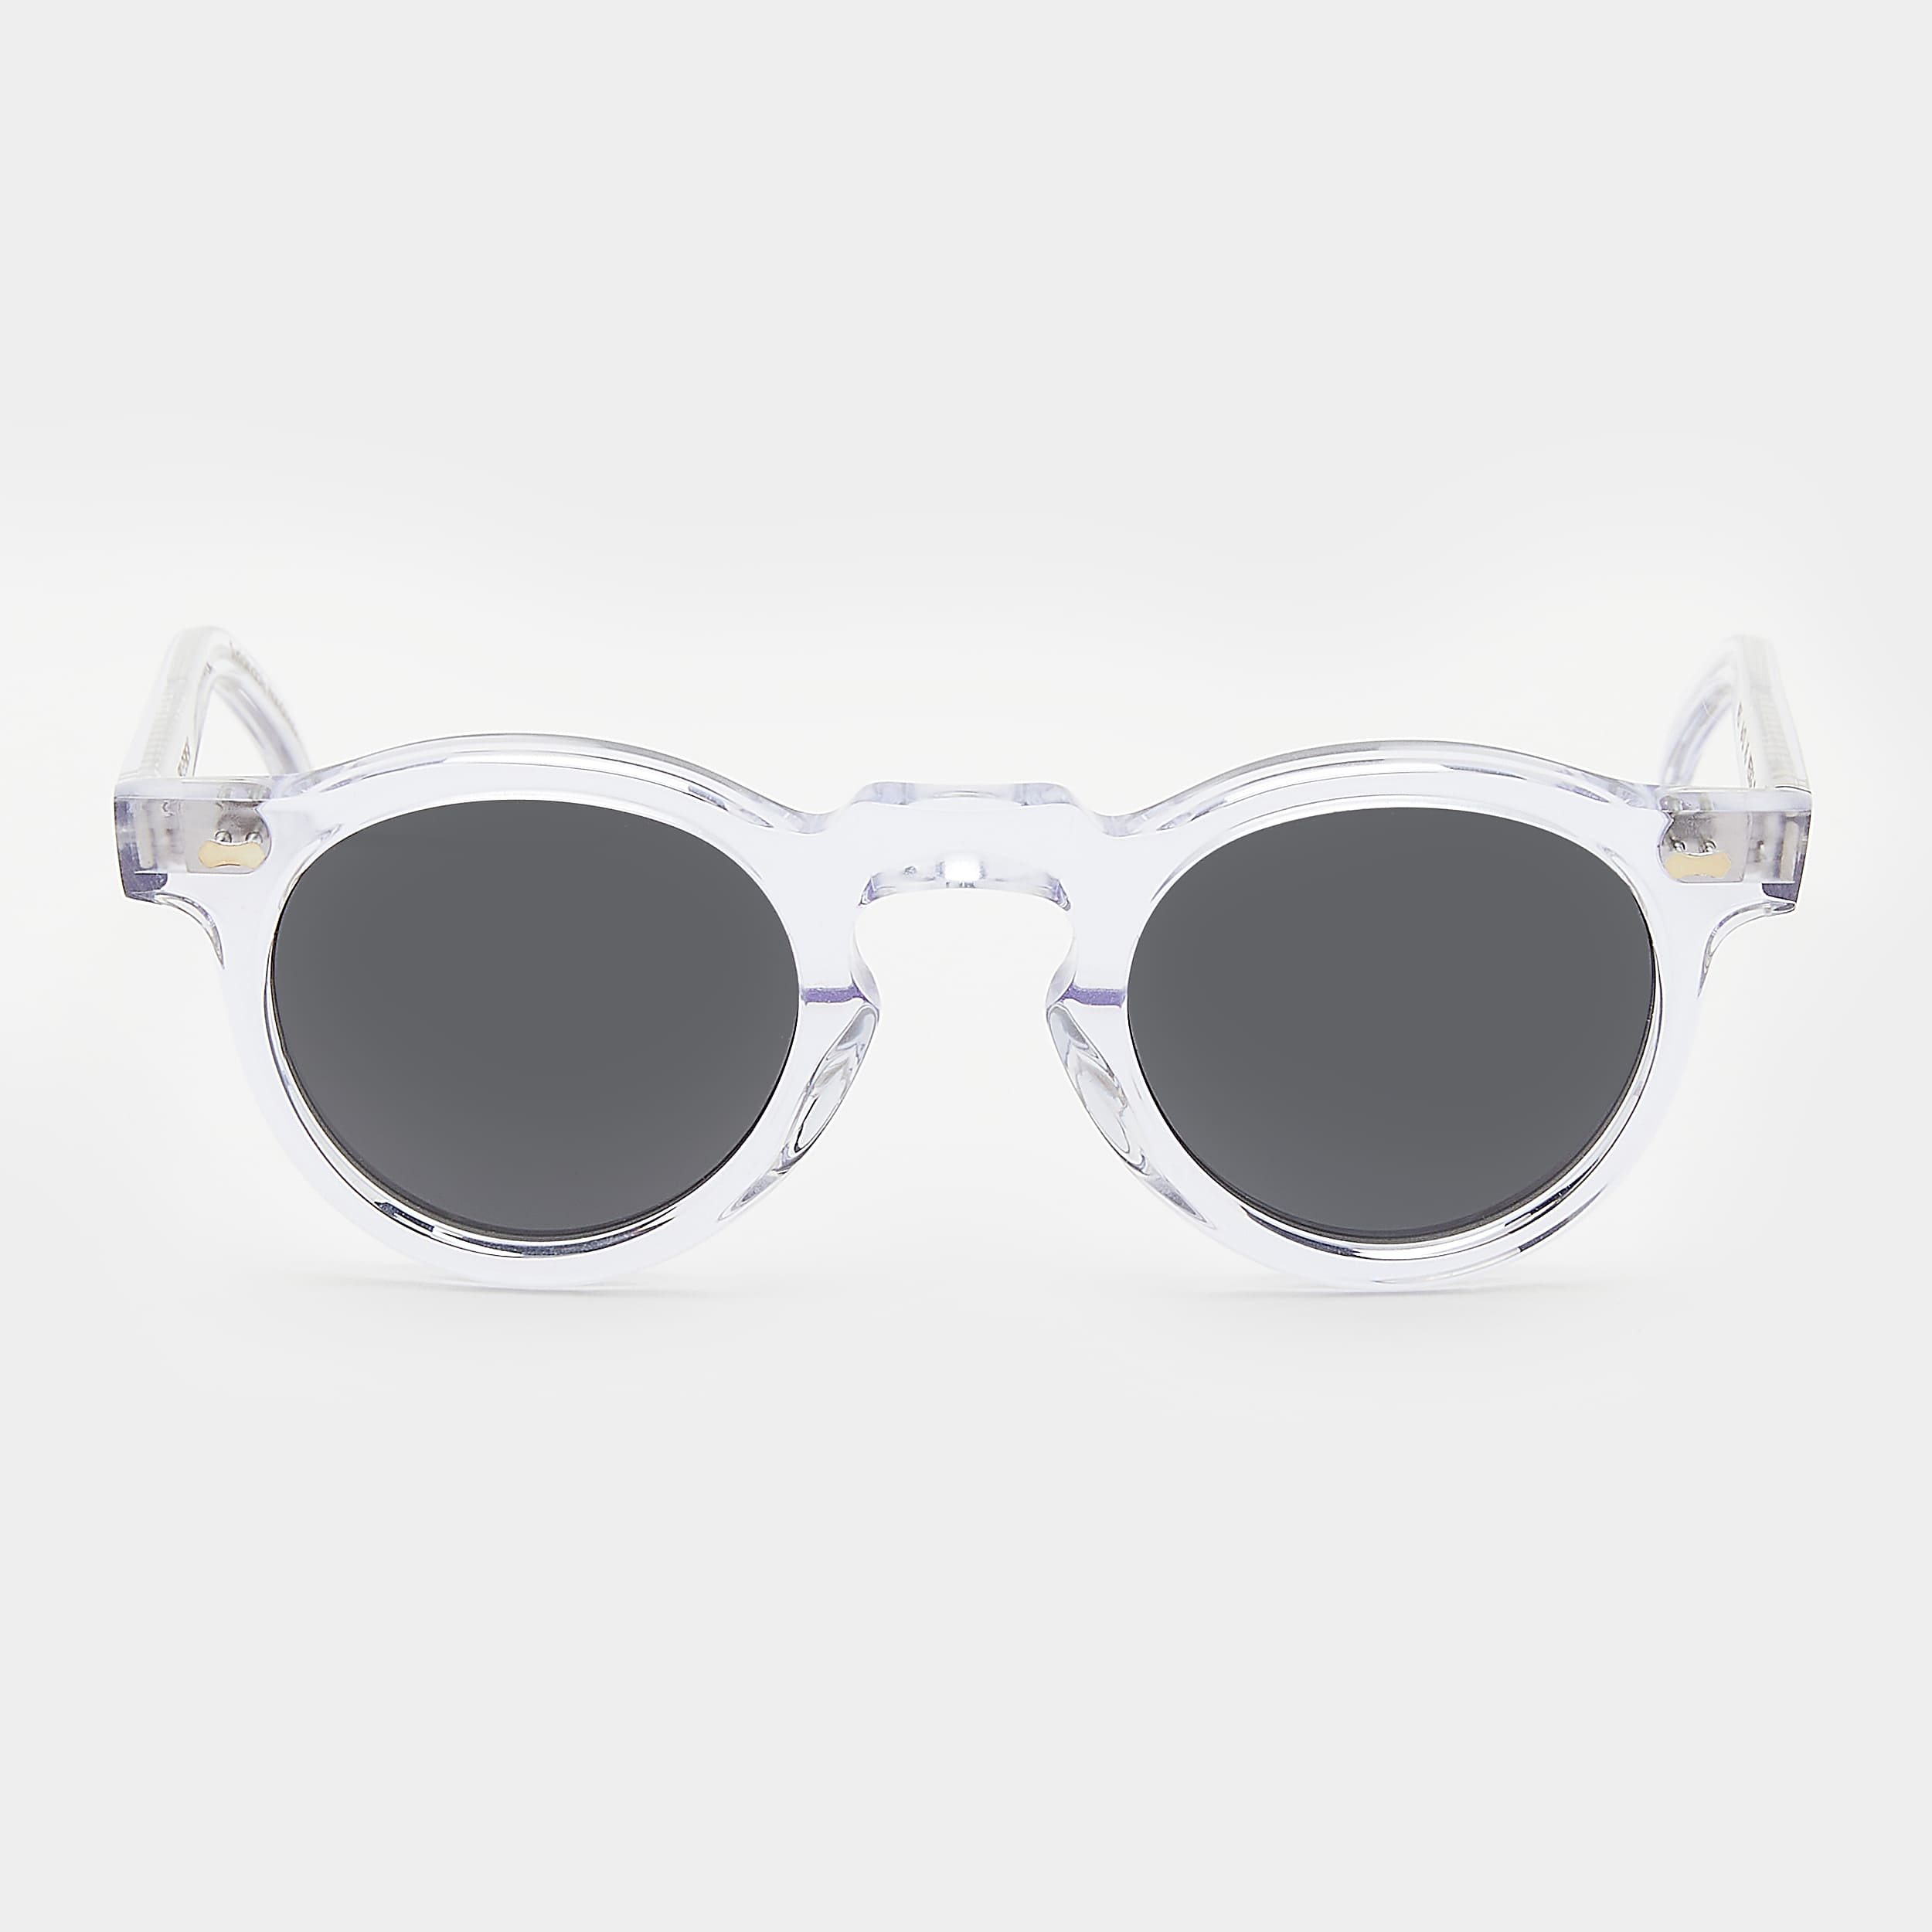 sunglasses-welt-transparent-gradient-grey-tbd-eyewear-front